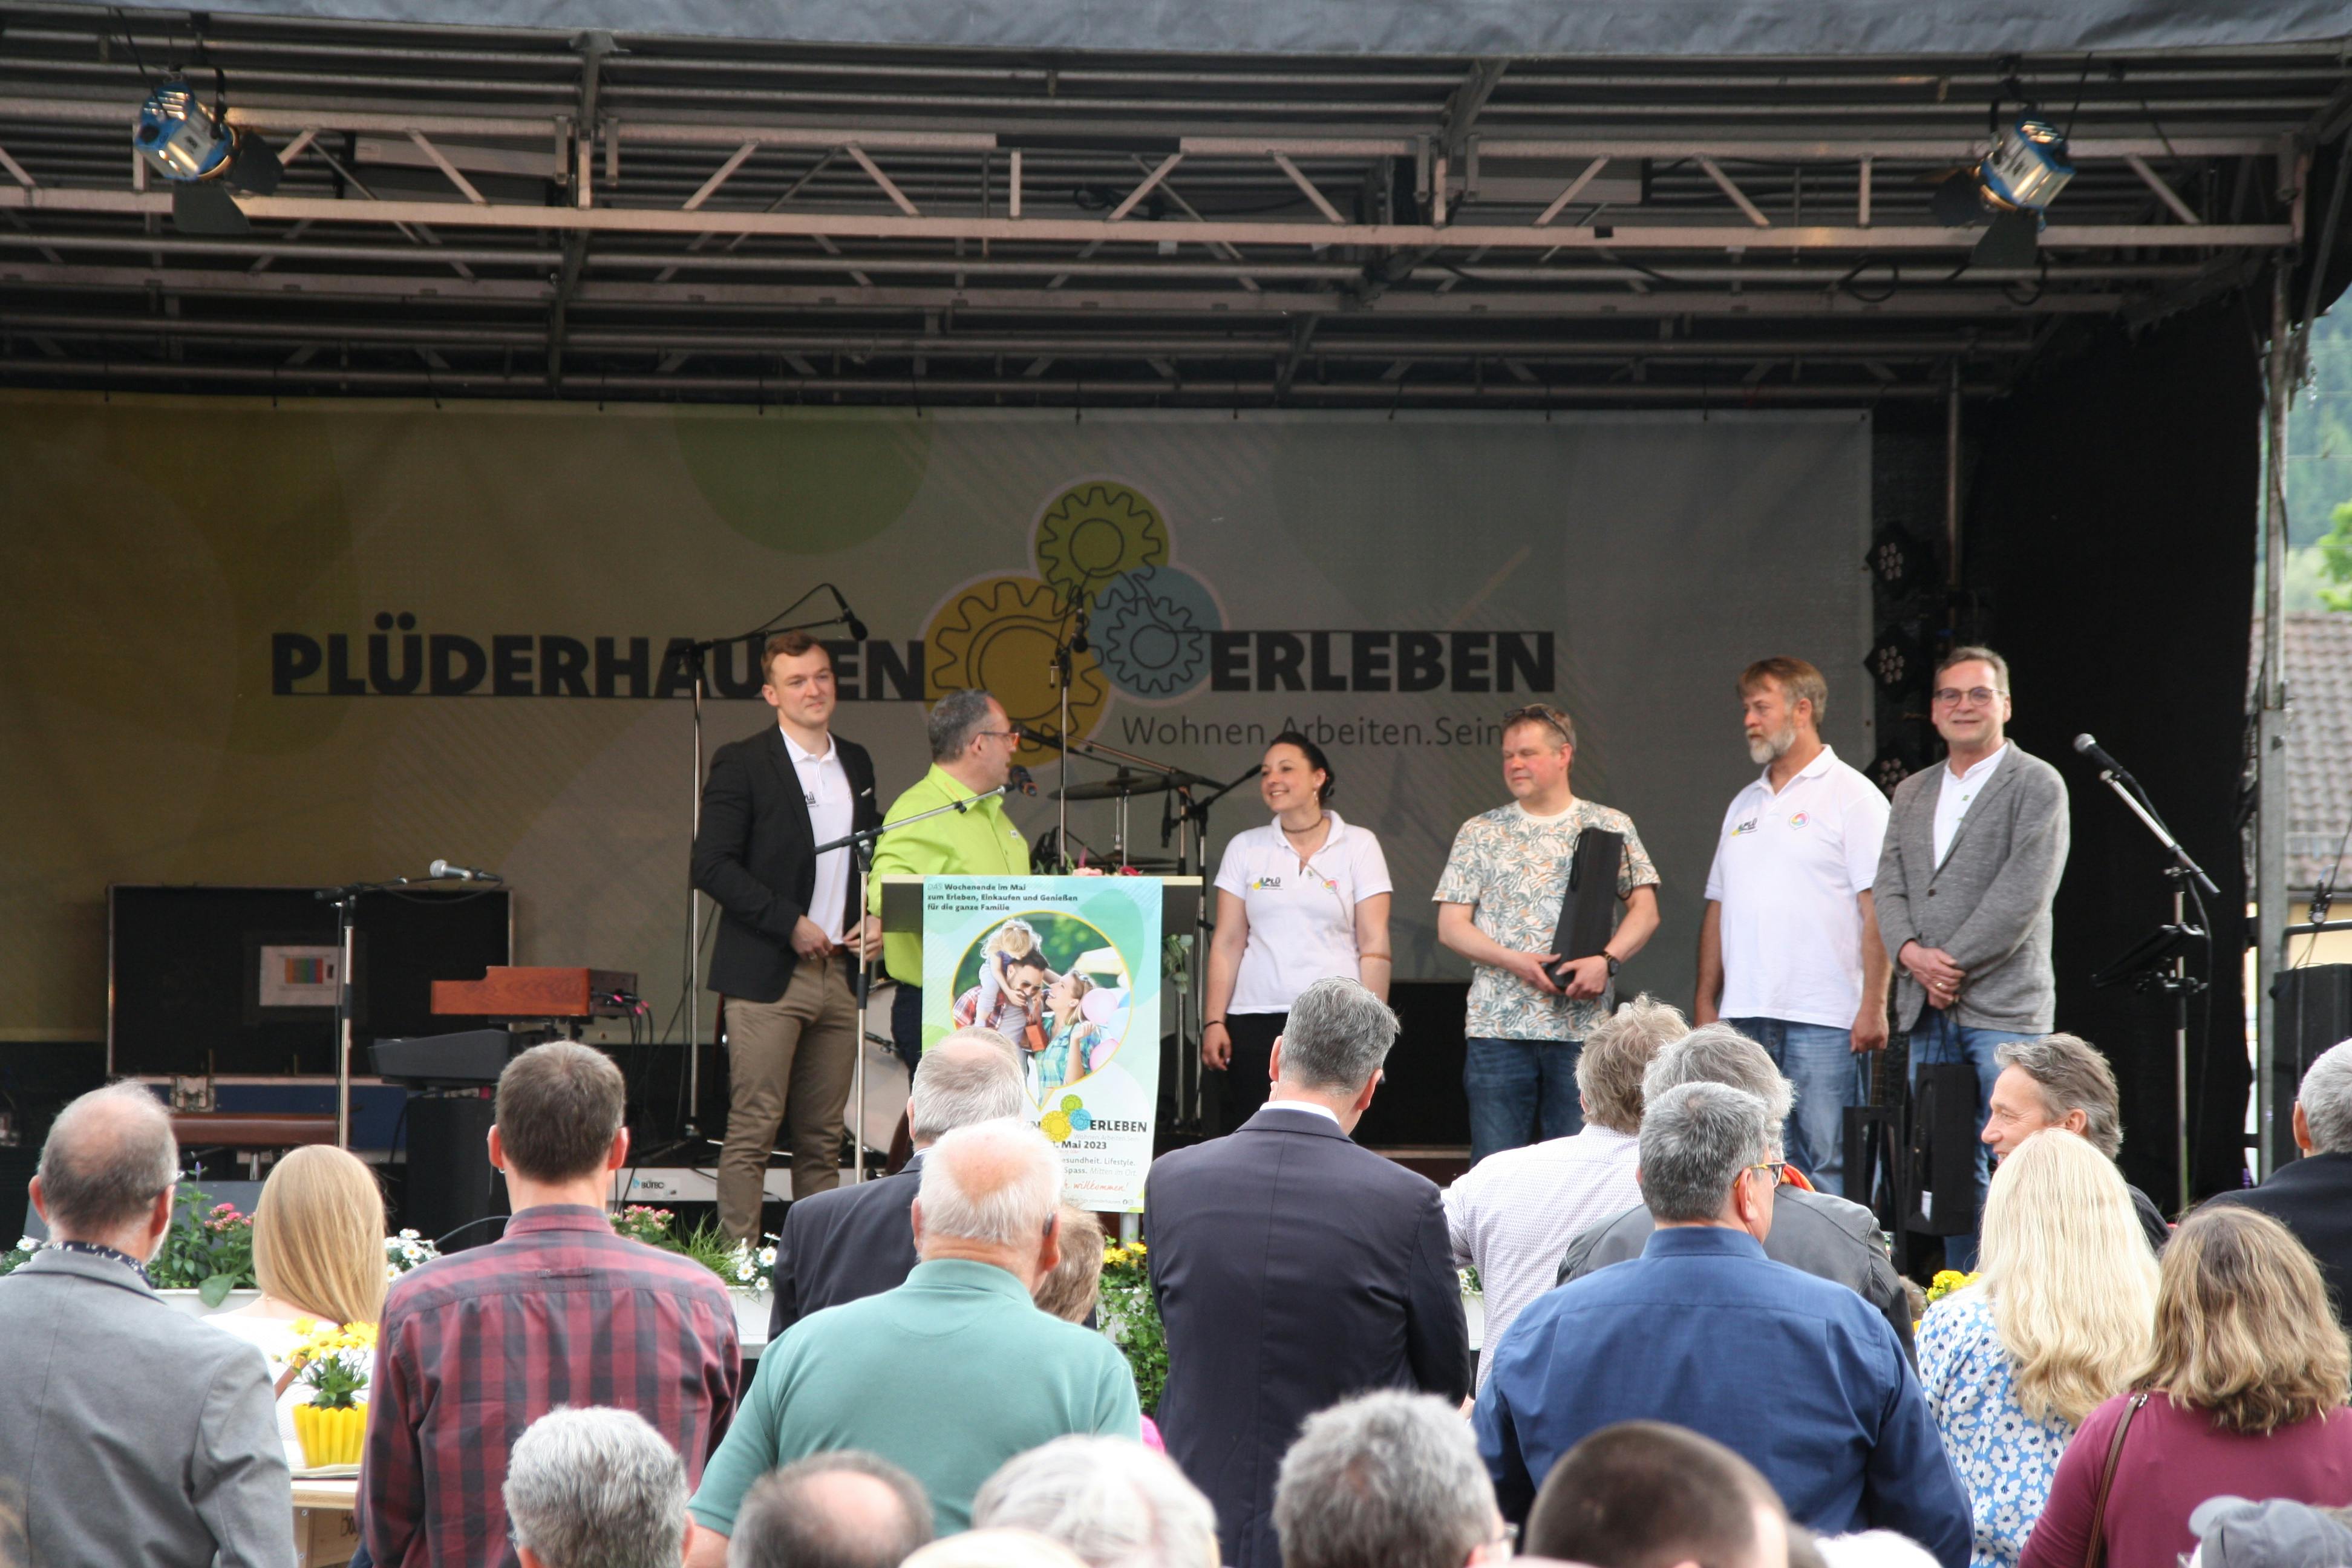 Bild zeigt Bürgermeister Treiber, Herr Brecht (HGV), Frau Raeder (Gemeinde), Herr Donner (HGV), Herr Schuler (HGV), Herr Bay (HGV) 